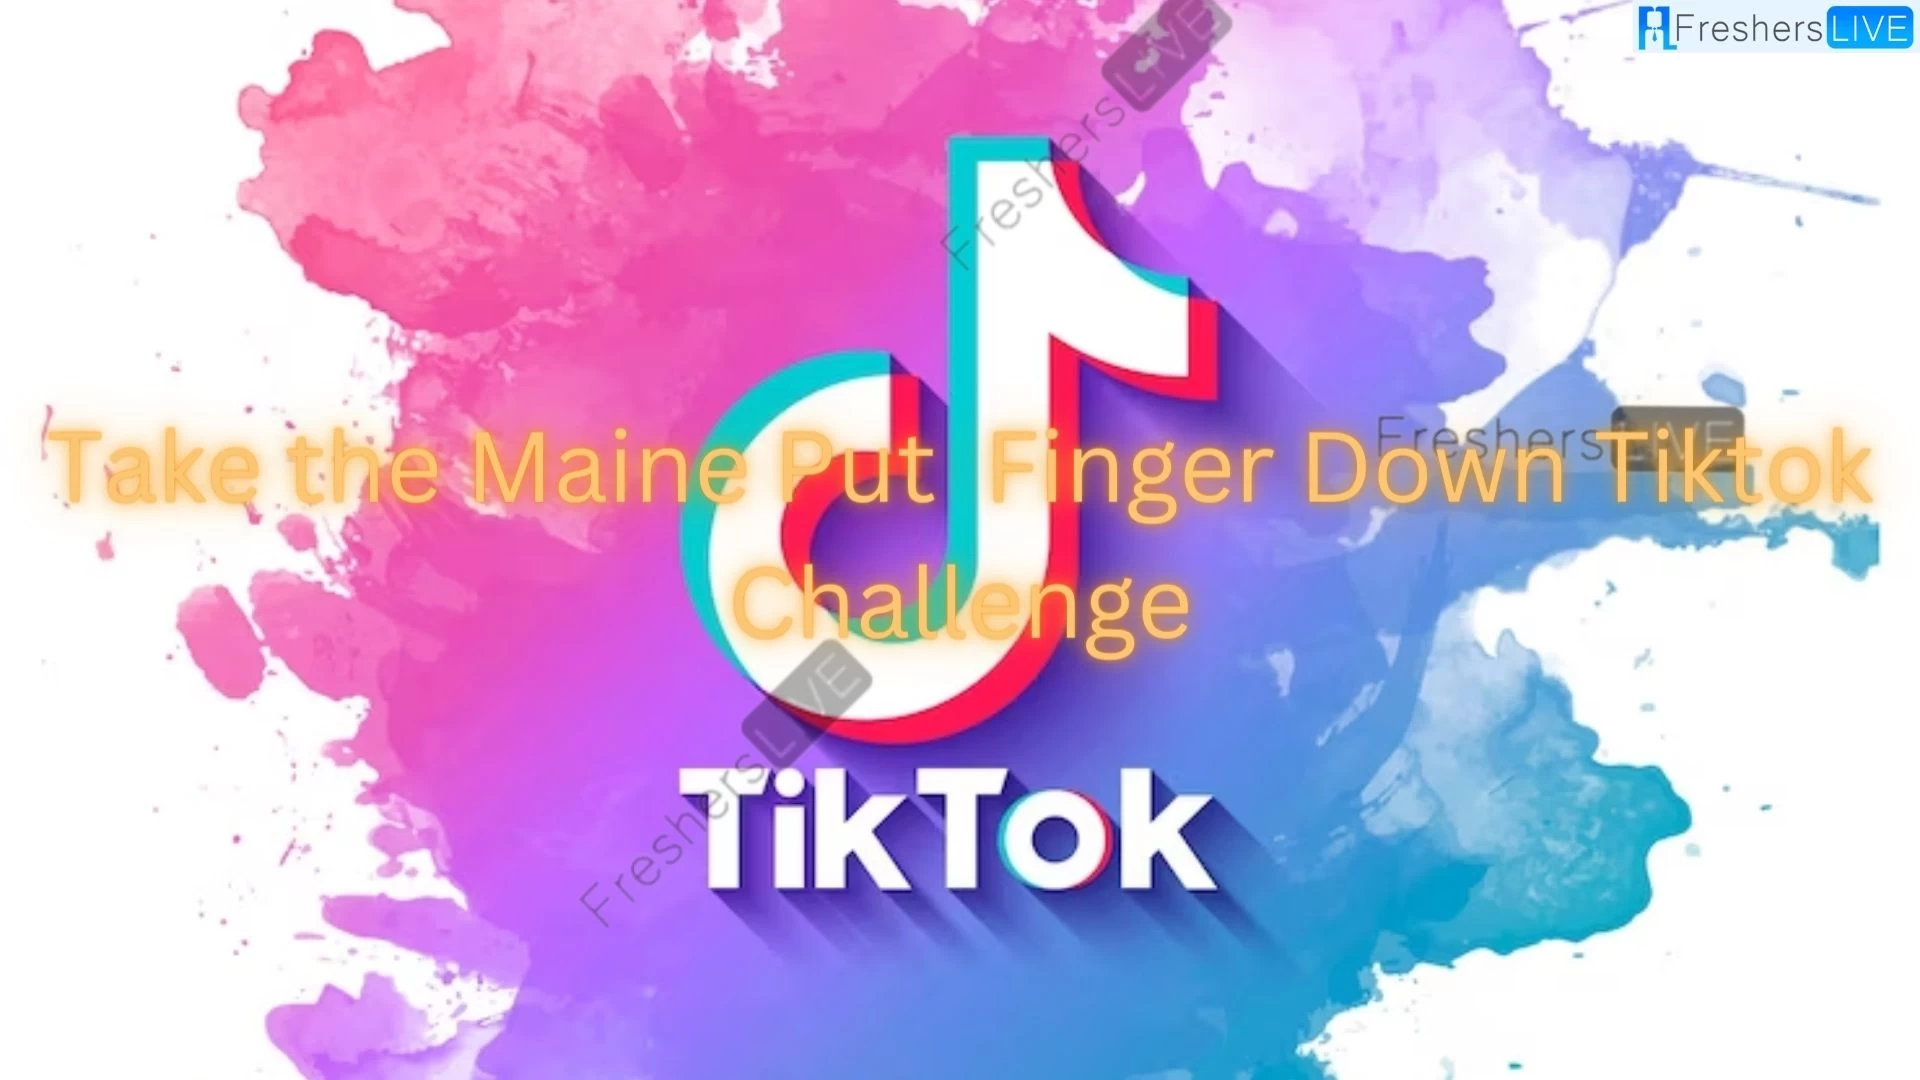 Take the Maine Put Finger Down Tiktok Challenge